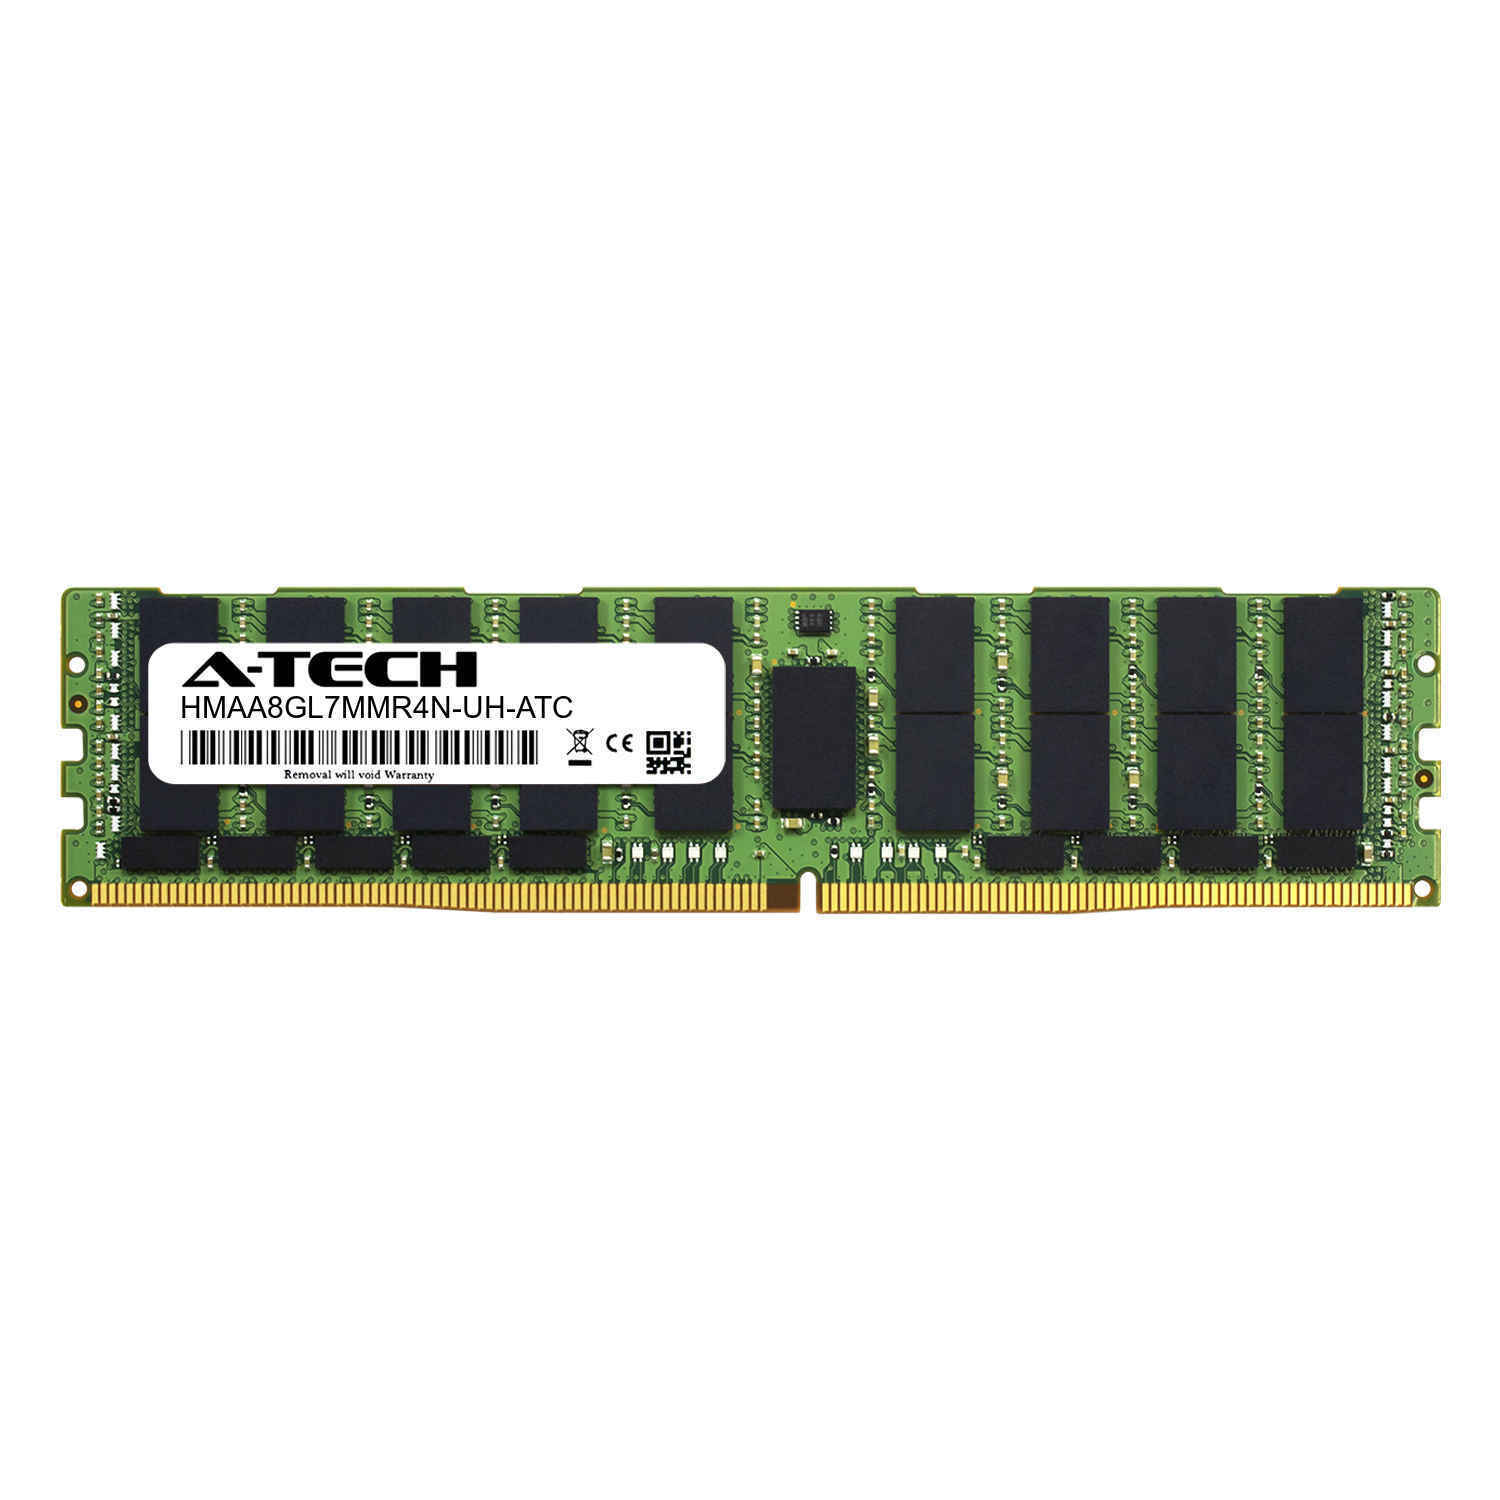 64GB DDR4 PC4-19200 LRDIMM (Hynix HMAA8GL7MMR4N-UH Equivalent) Server Memory RAM